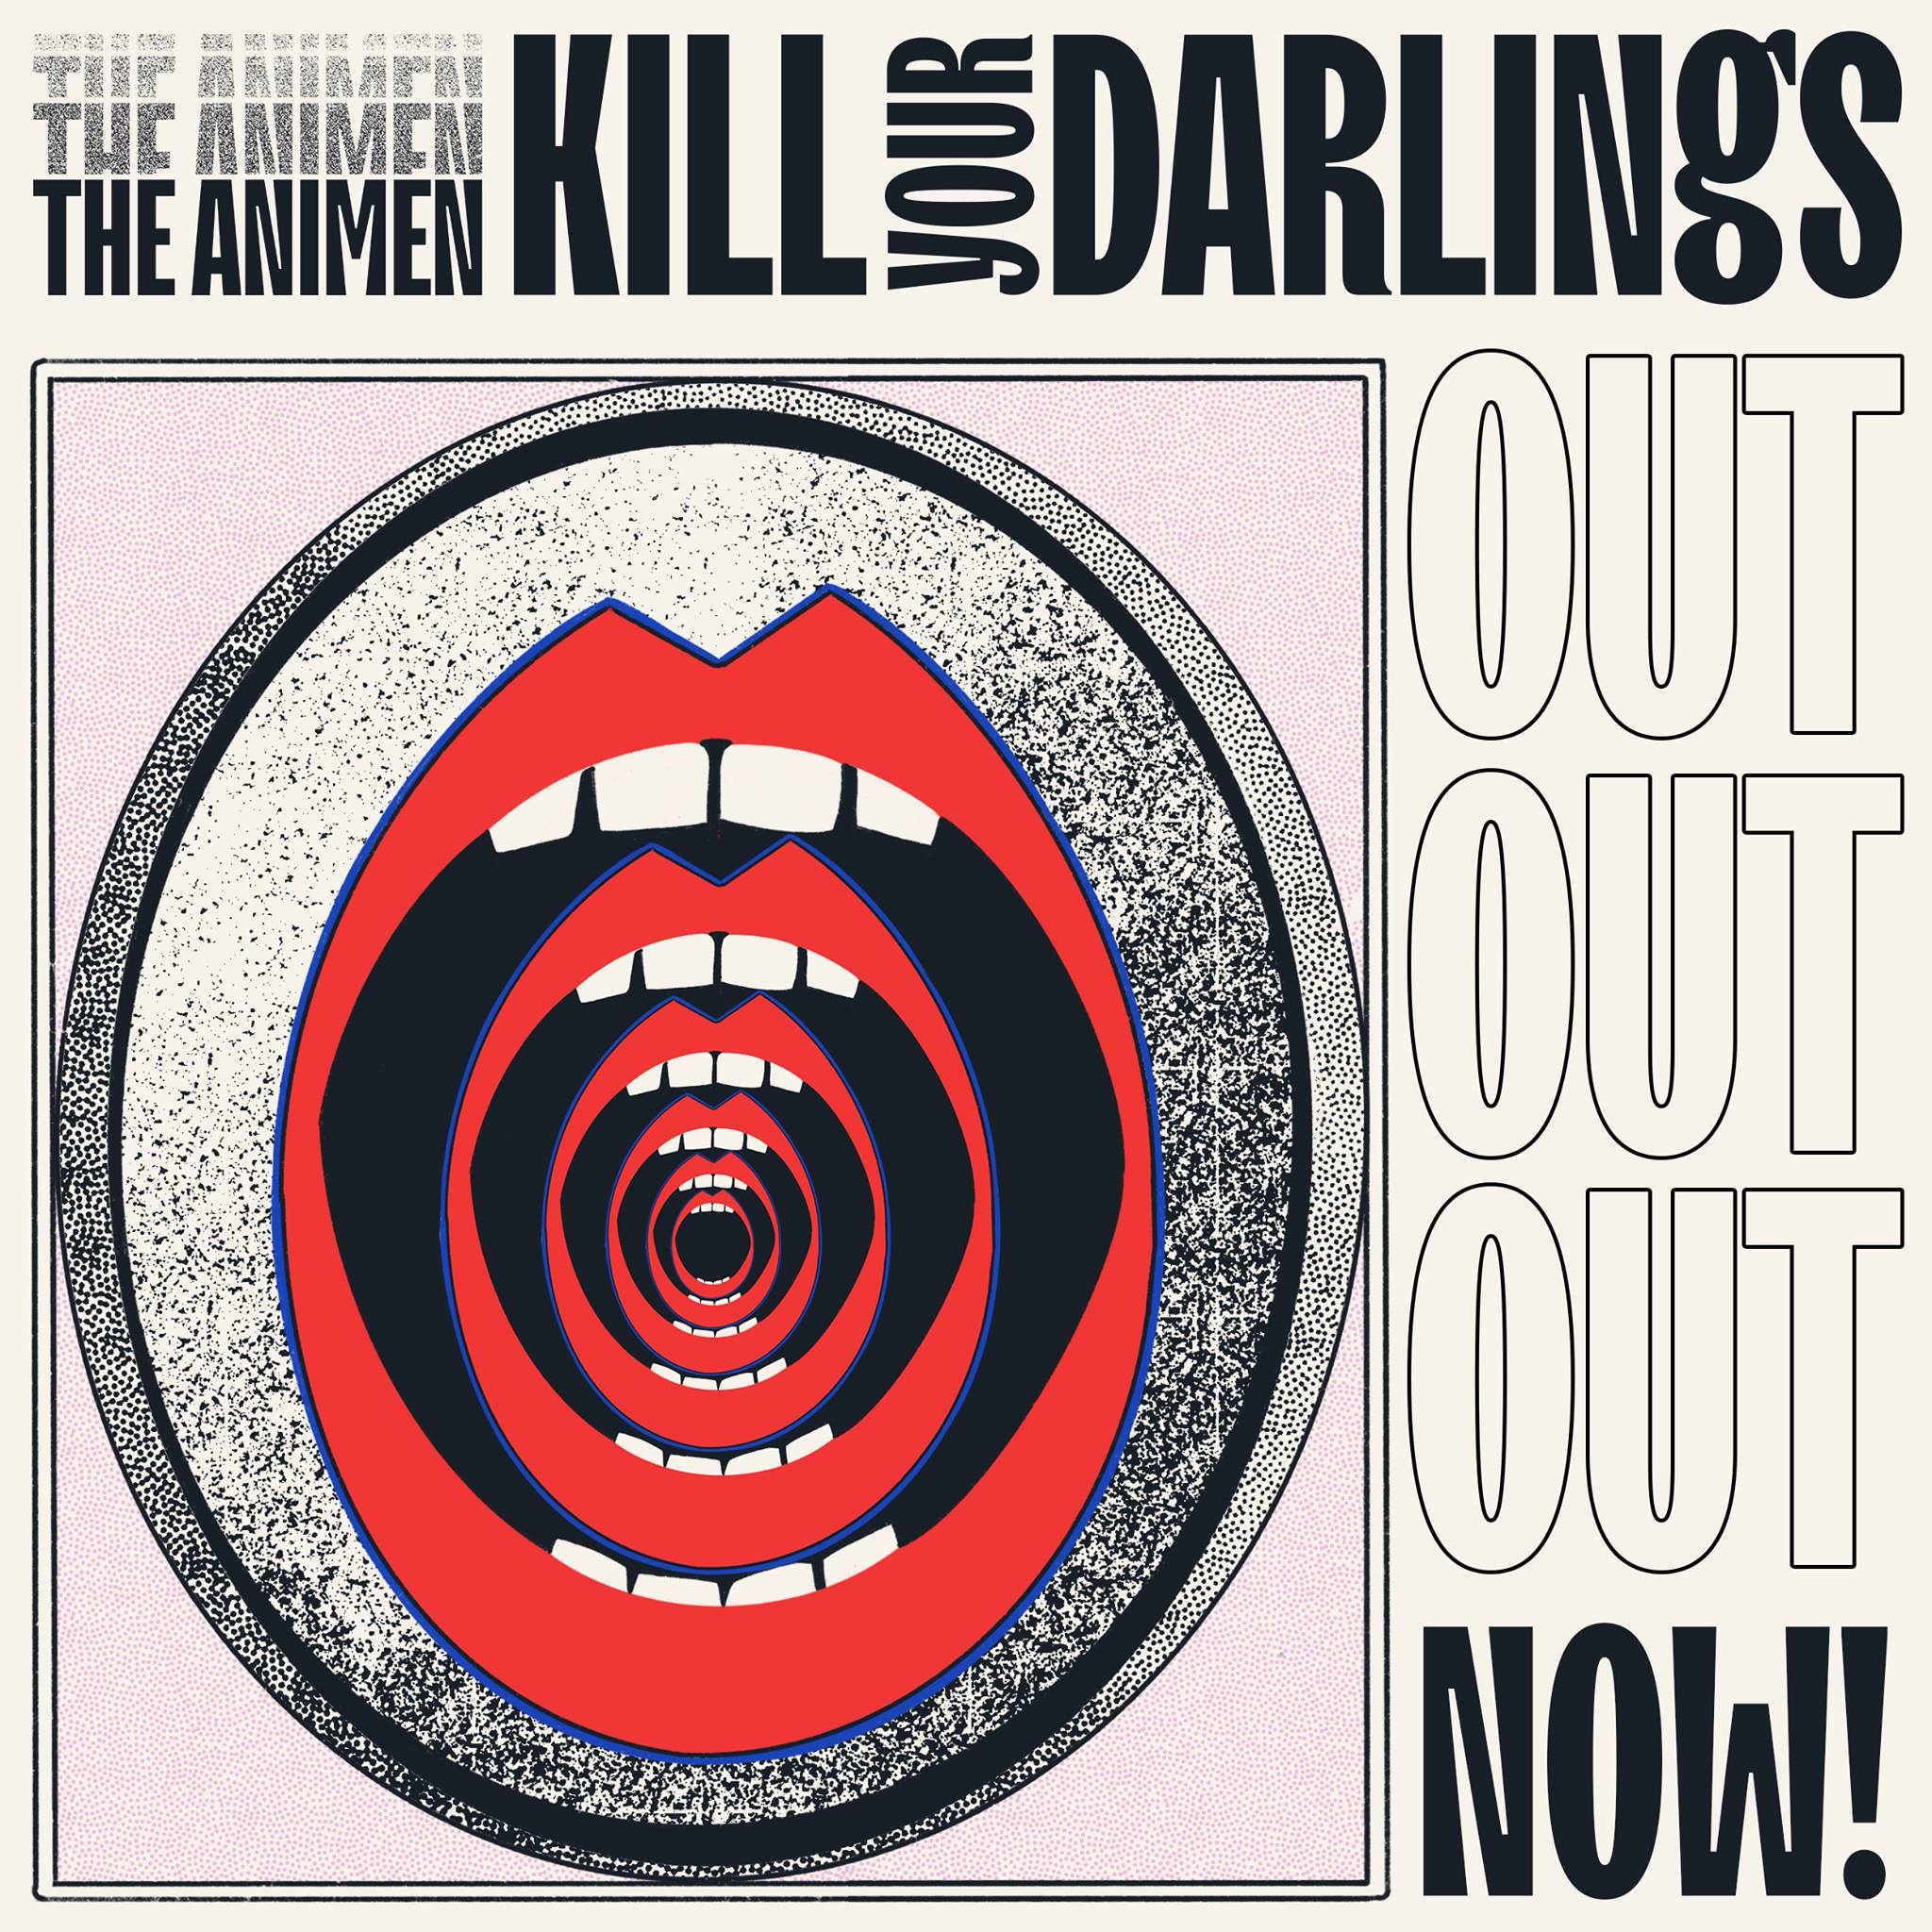 The_animen_Kill_Your_Darlings